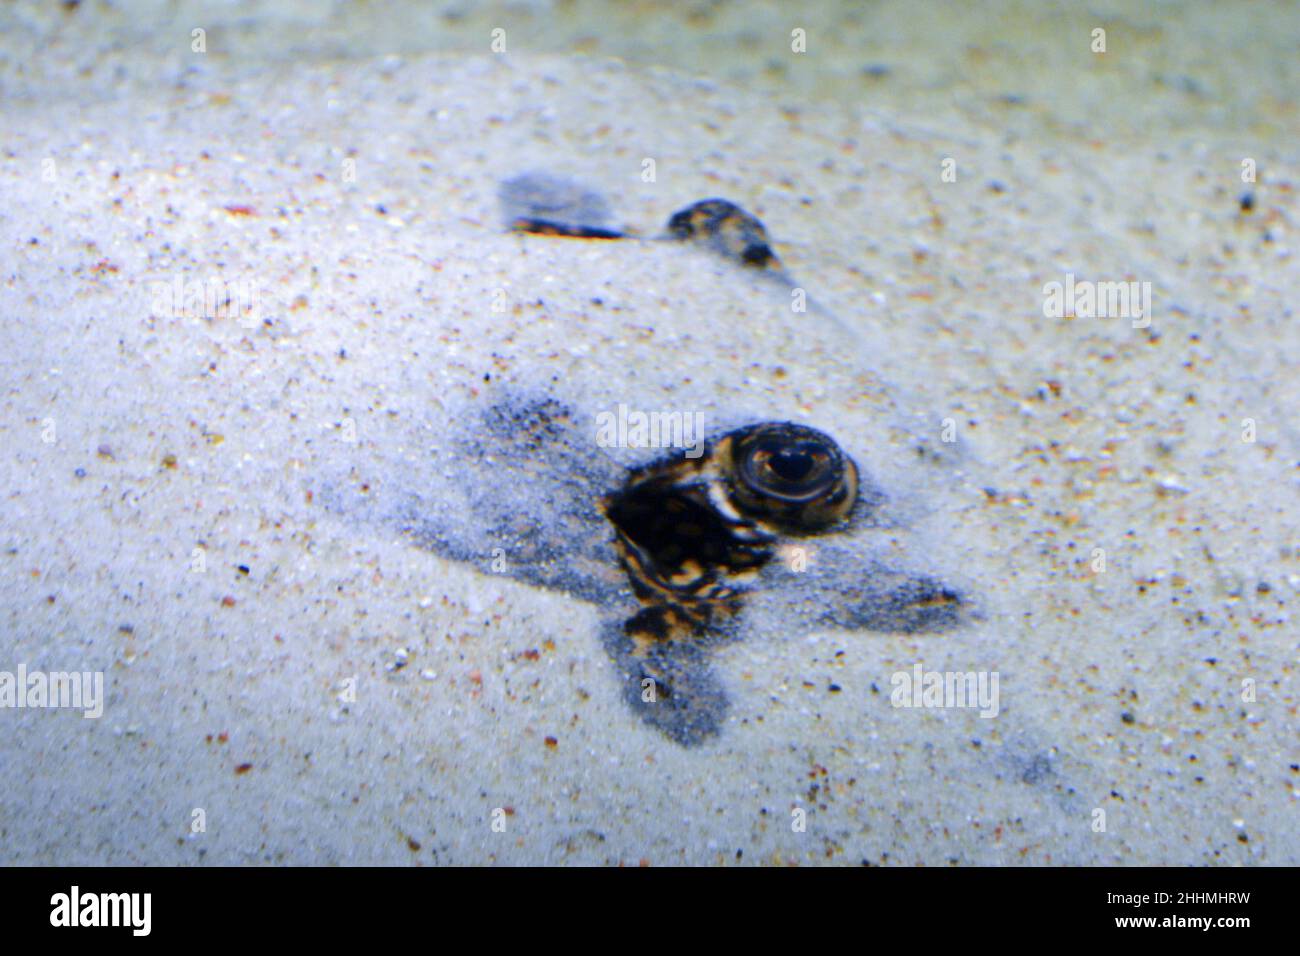 Ocellate river stingray, Potamotrygon motoro fish hidden under sand - close-up on eyes Stock Photo